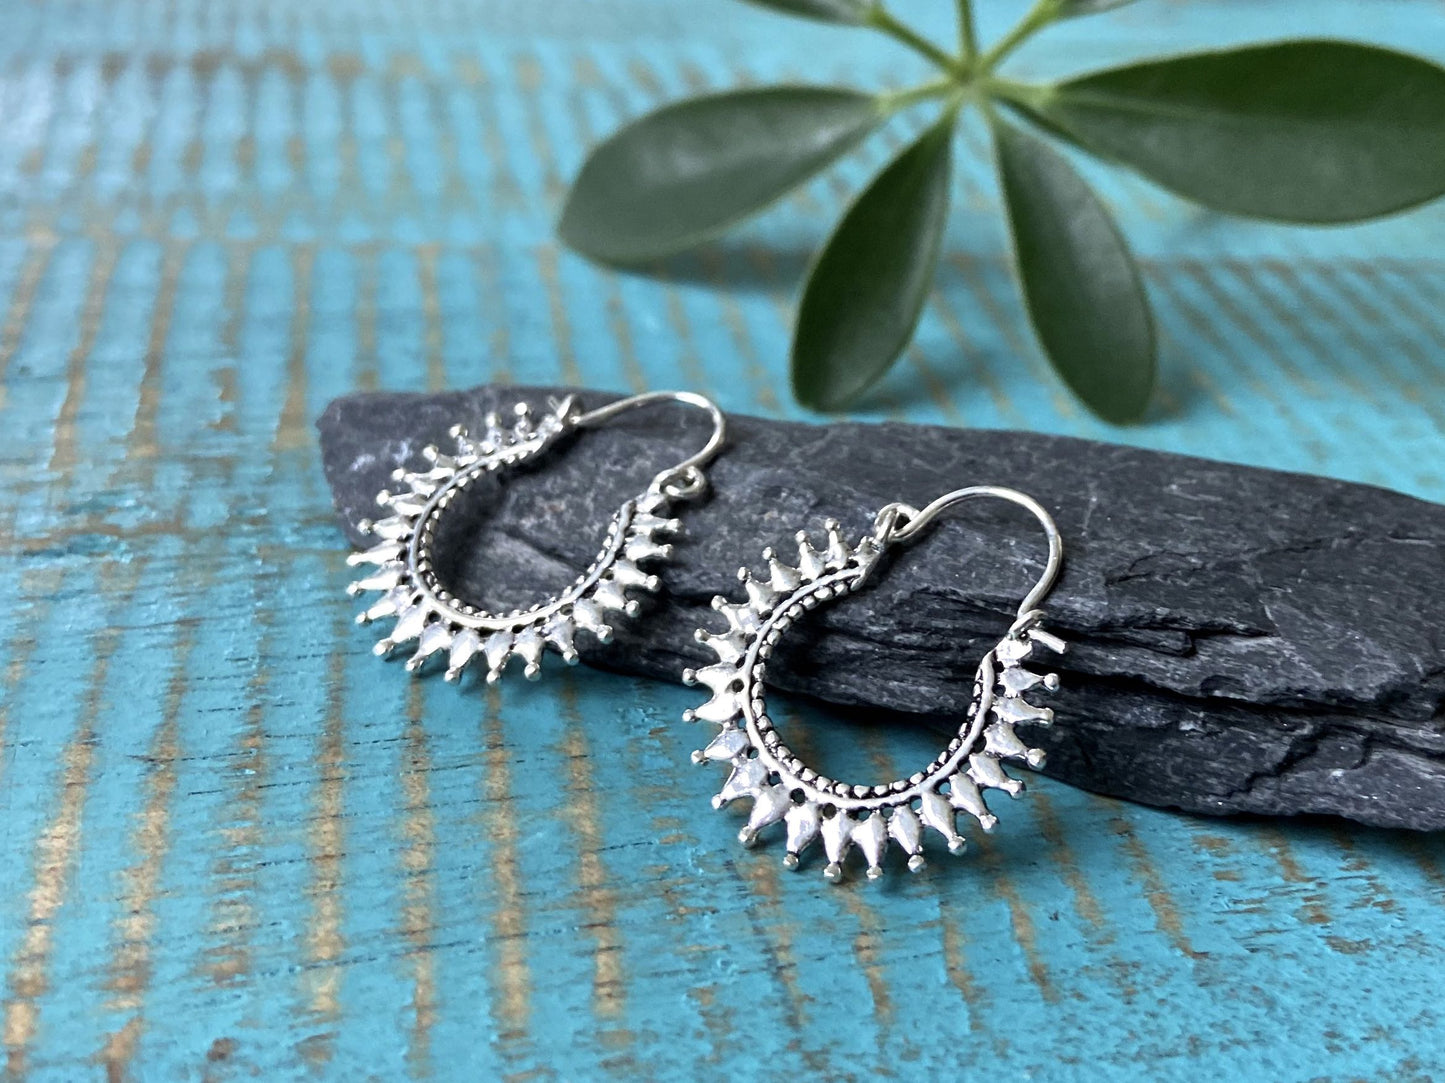 small filigree hoop earrings made of silver